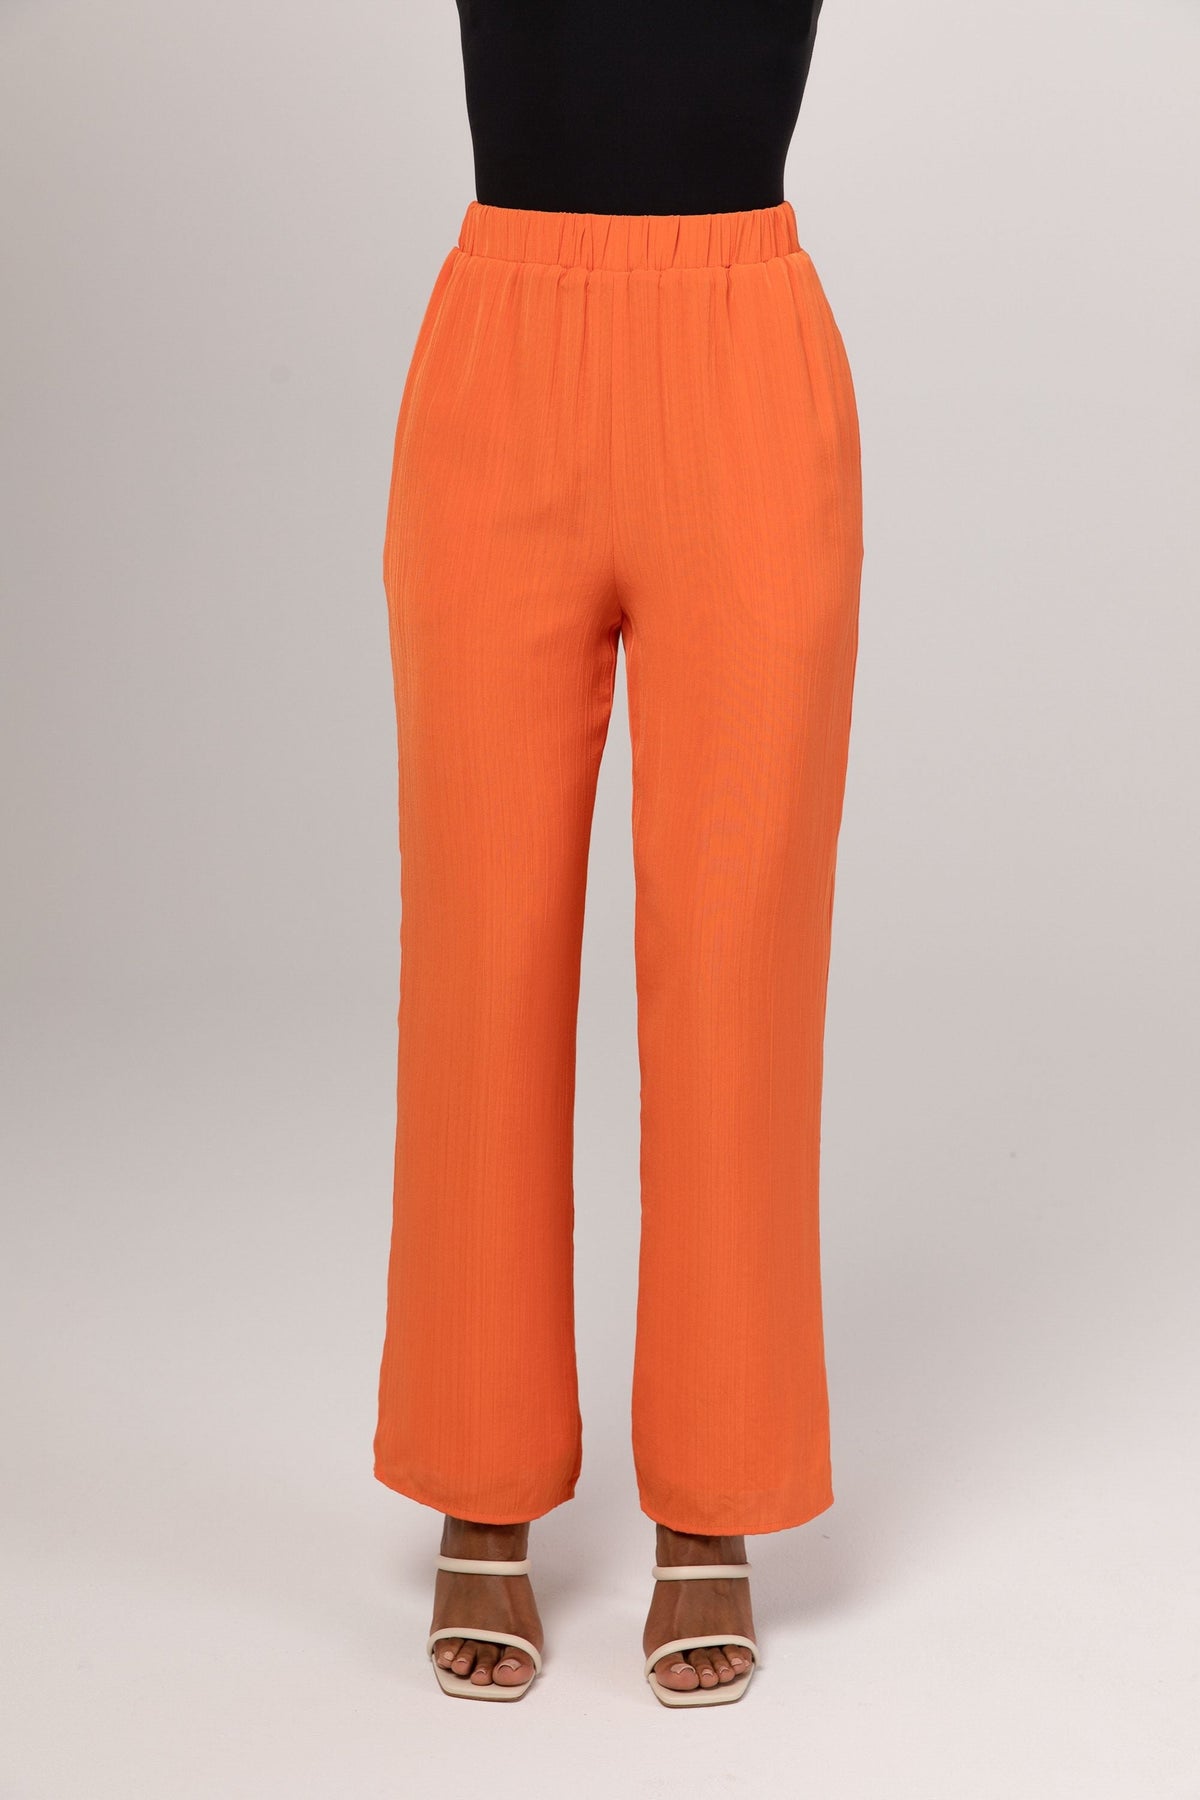 Nashwa Textured Rayon Wide Leg Pants - Papaya Veiled 